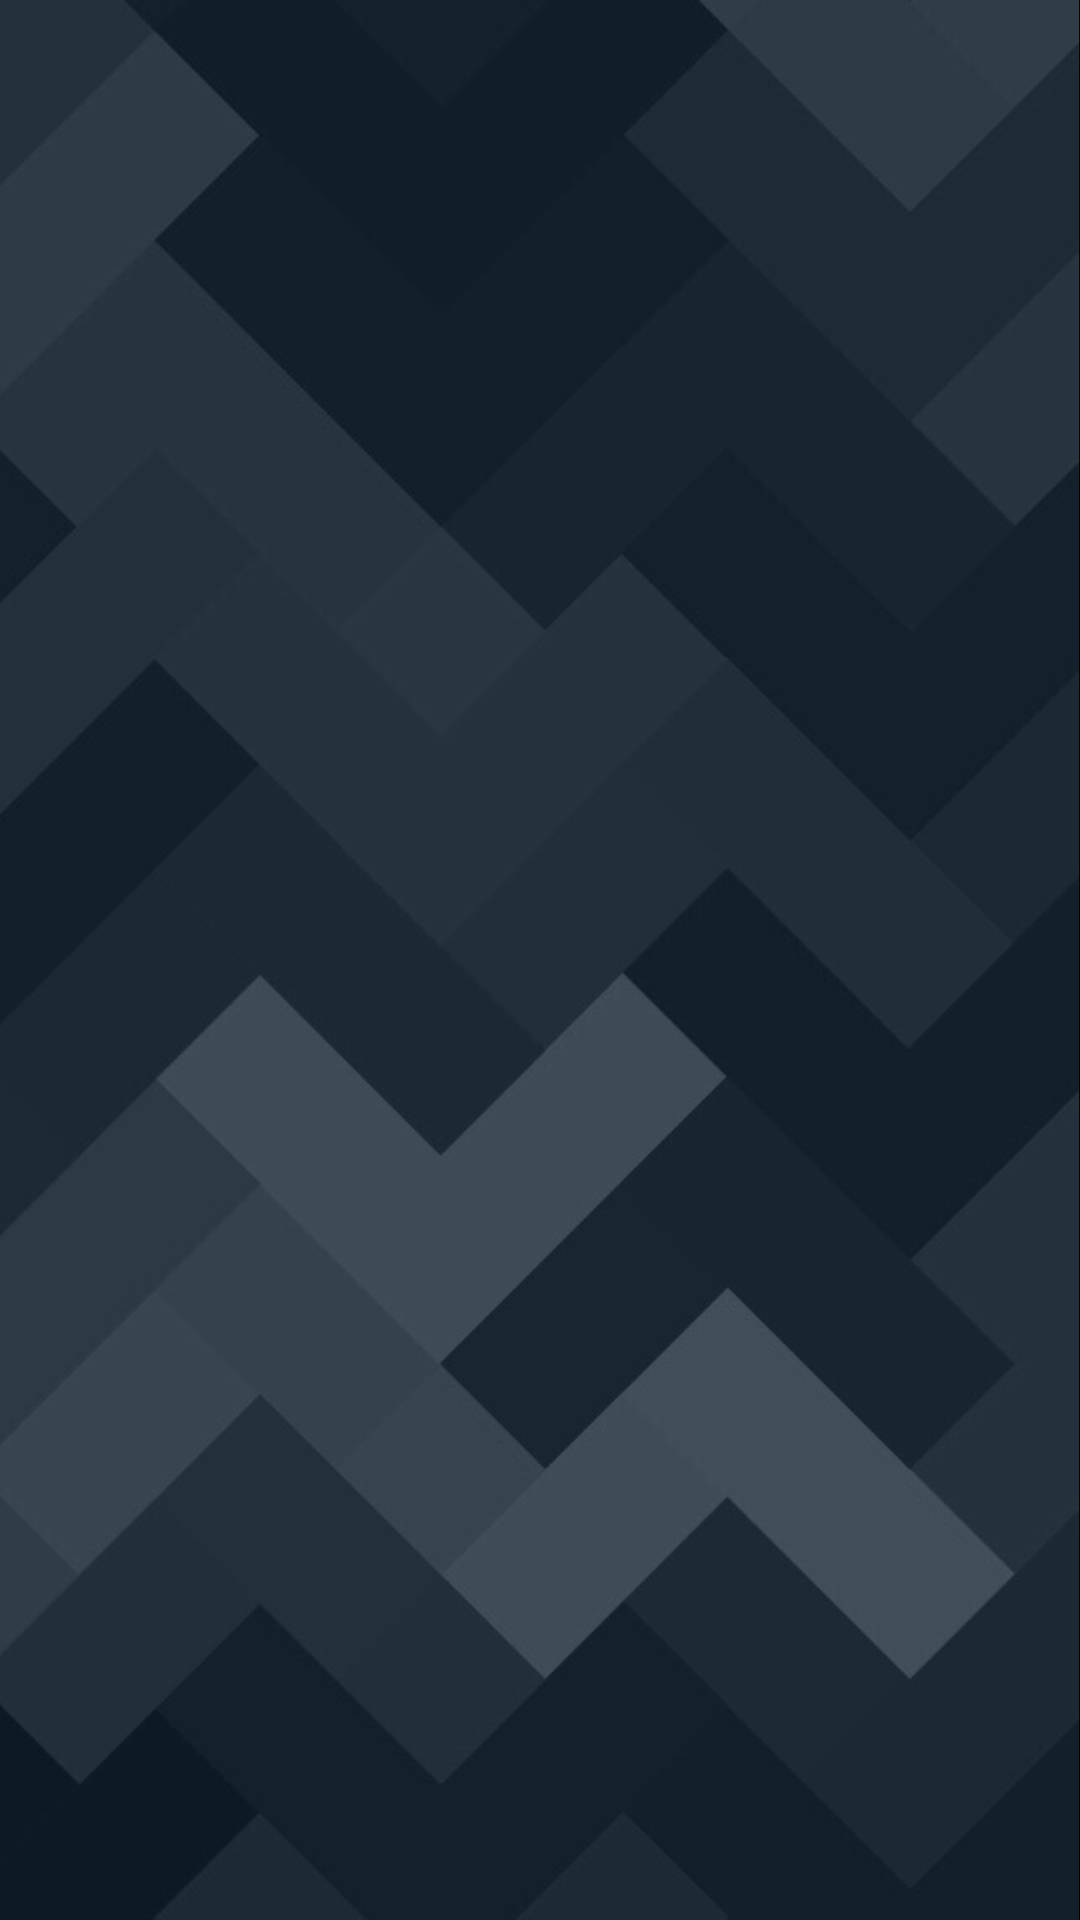 Simple Black Arrows Geometric Phone Wallpaper